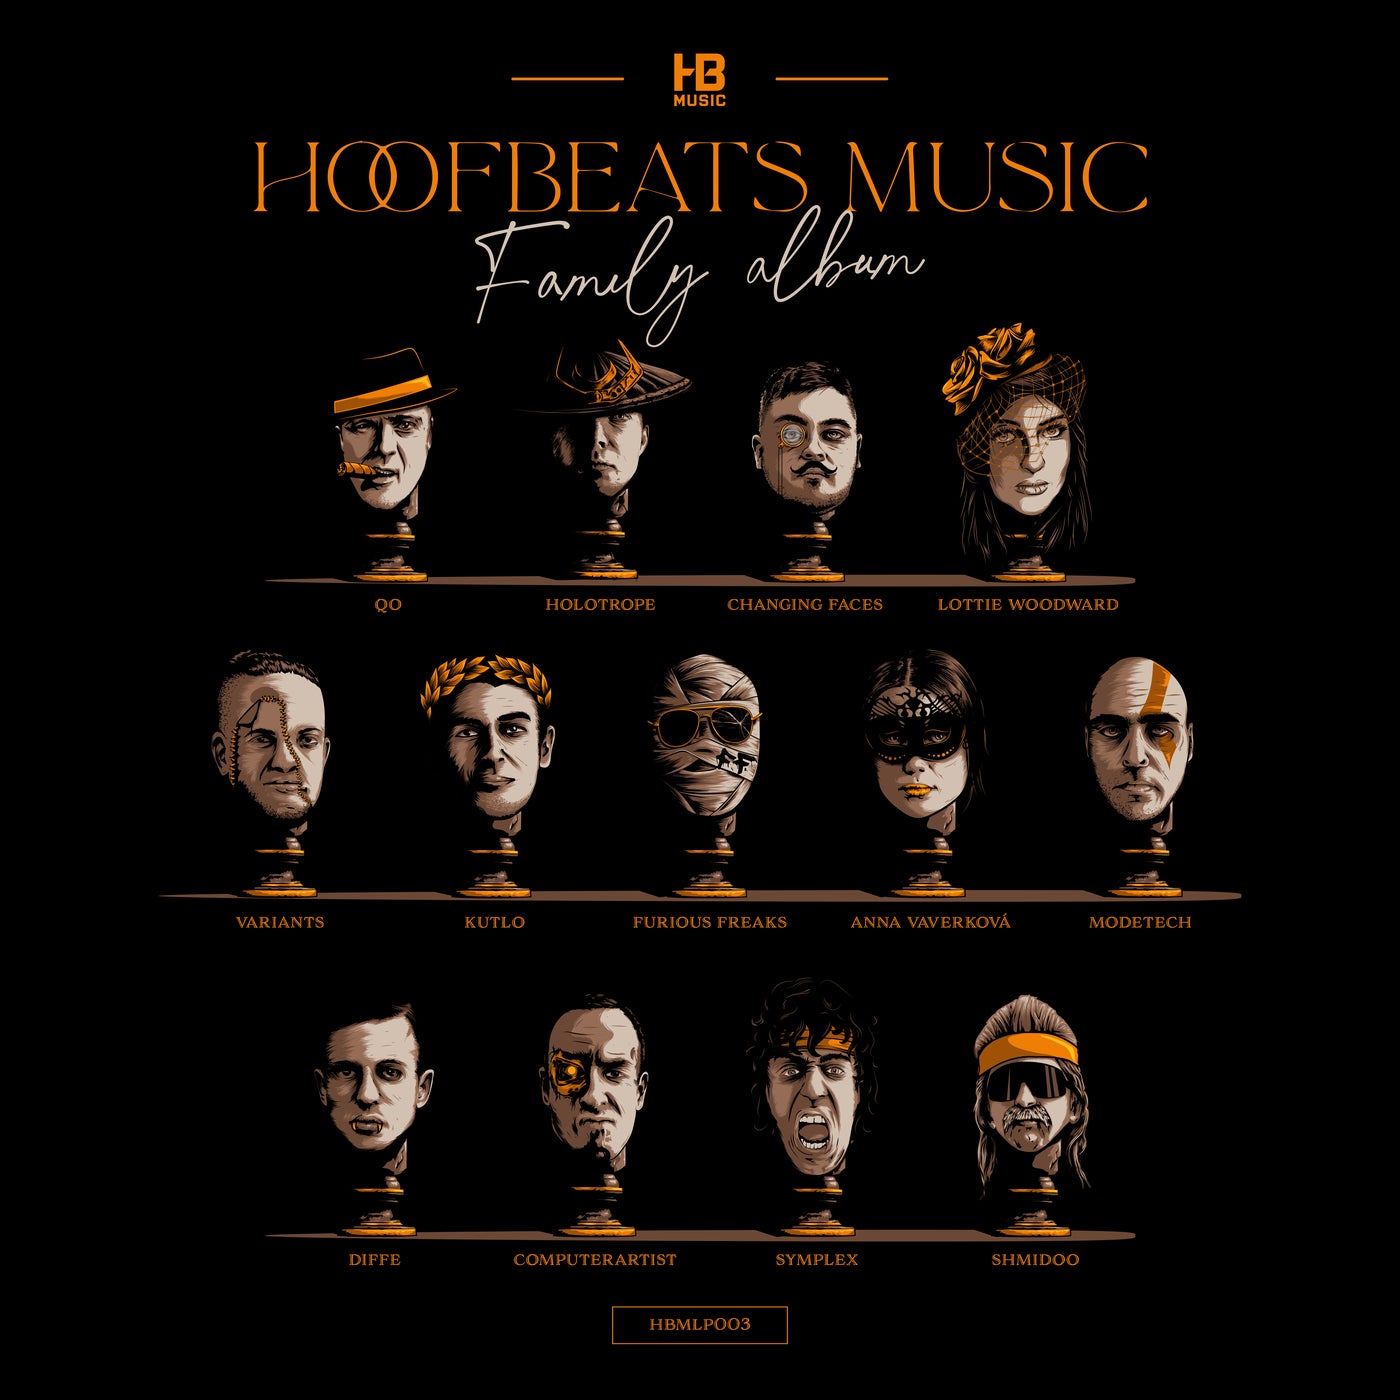 The Hoofbeats Music Family Album